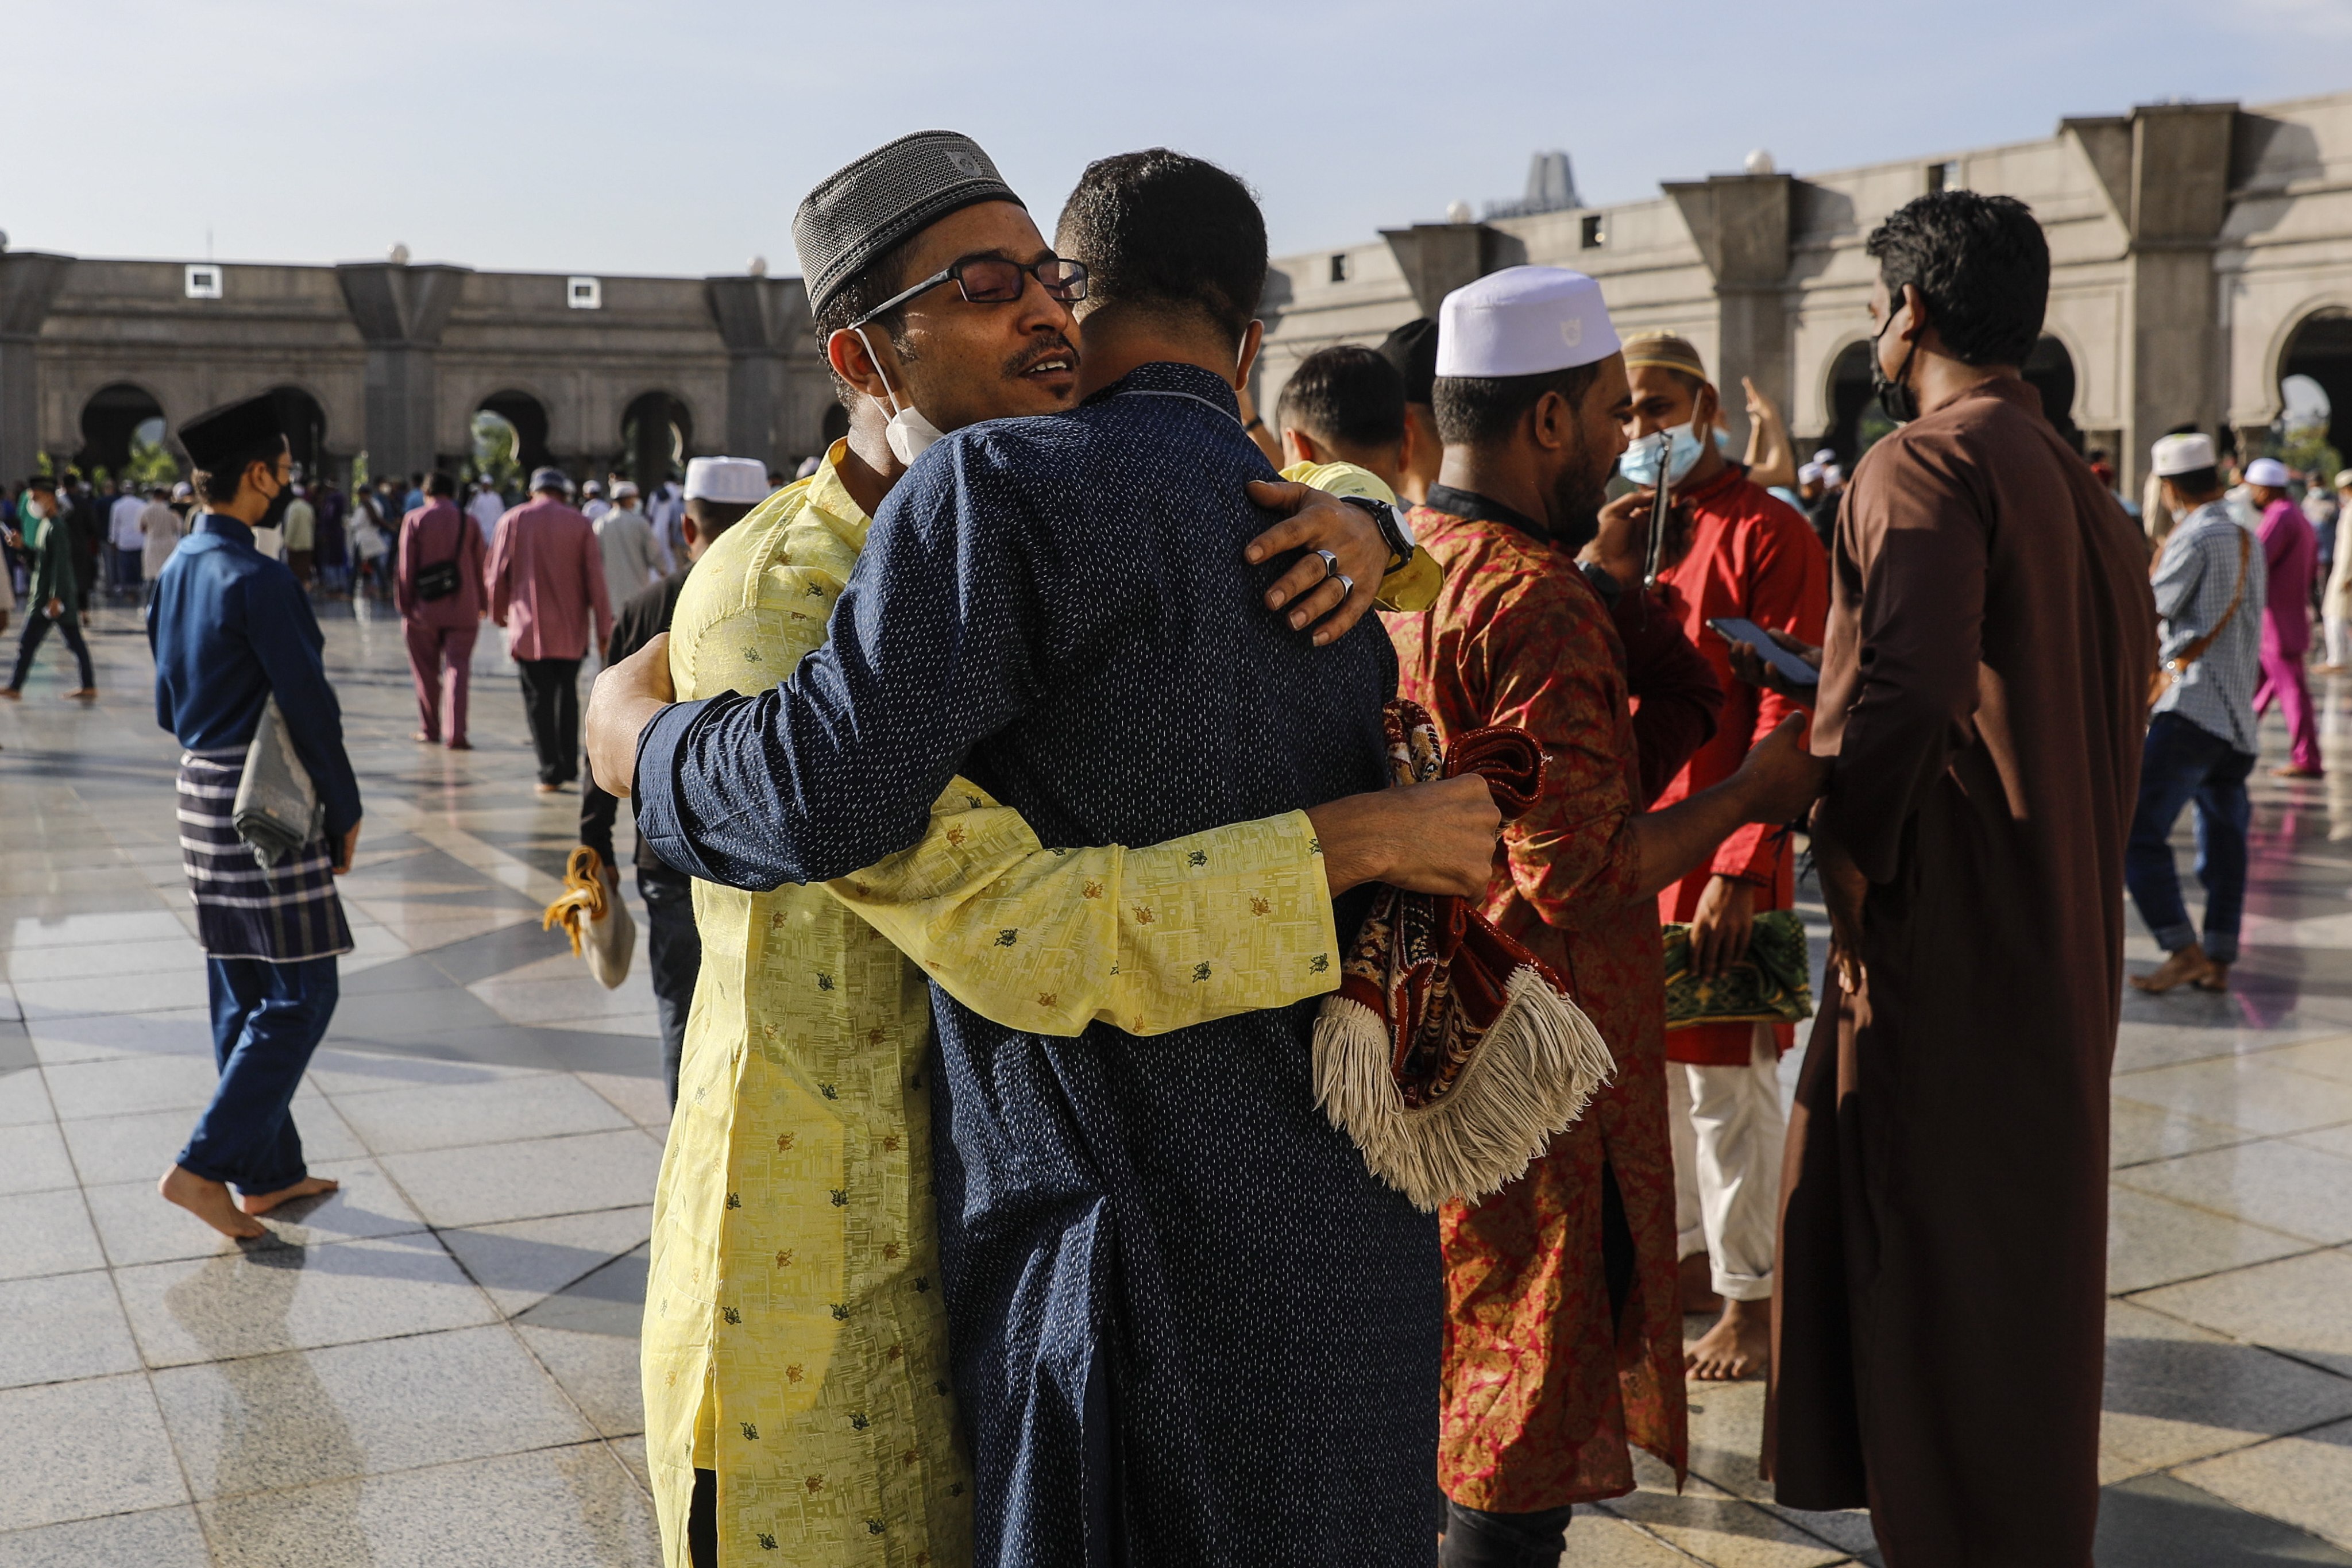 Two men embrace after taking part in Eid al-Fitr prayers in Kuala Lumpur on Monday. Photo: EPA-EFE